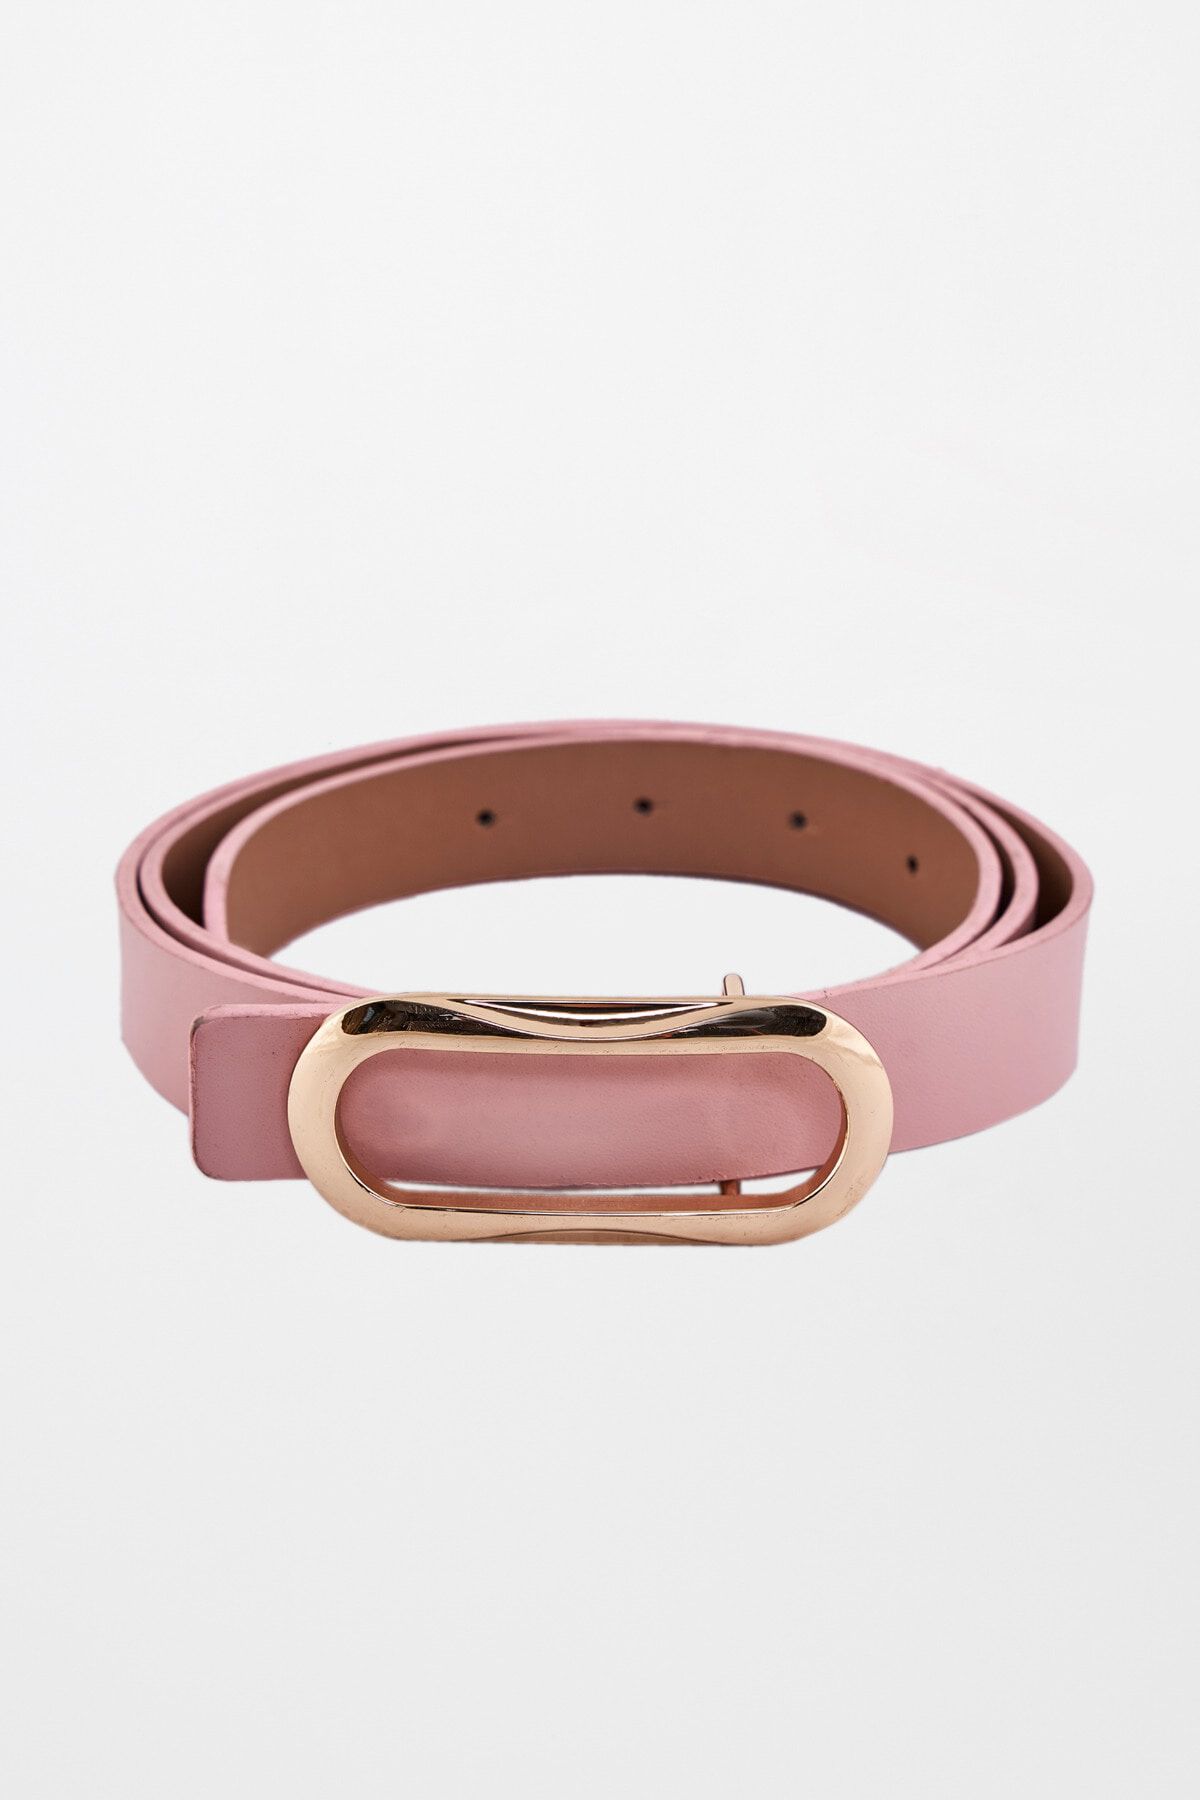 discount 79% WOMEN FASHION Accessories Belt Pink NoName belt Pink Single 